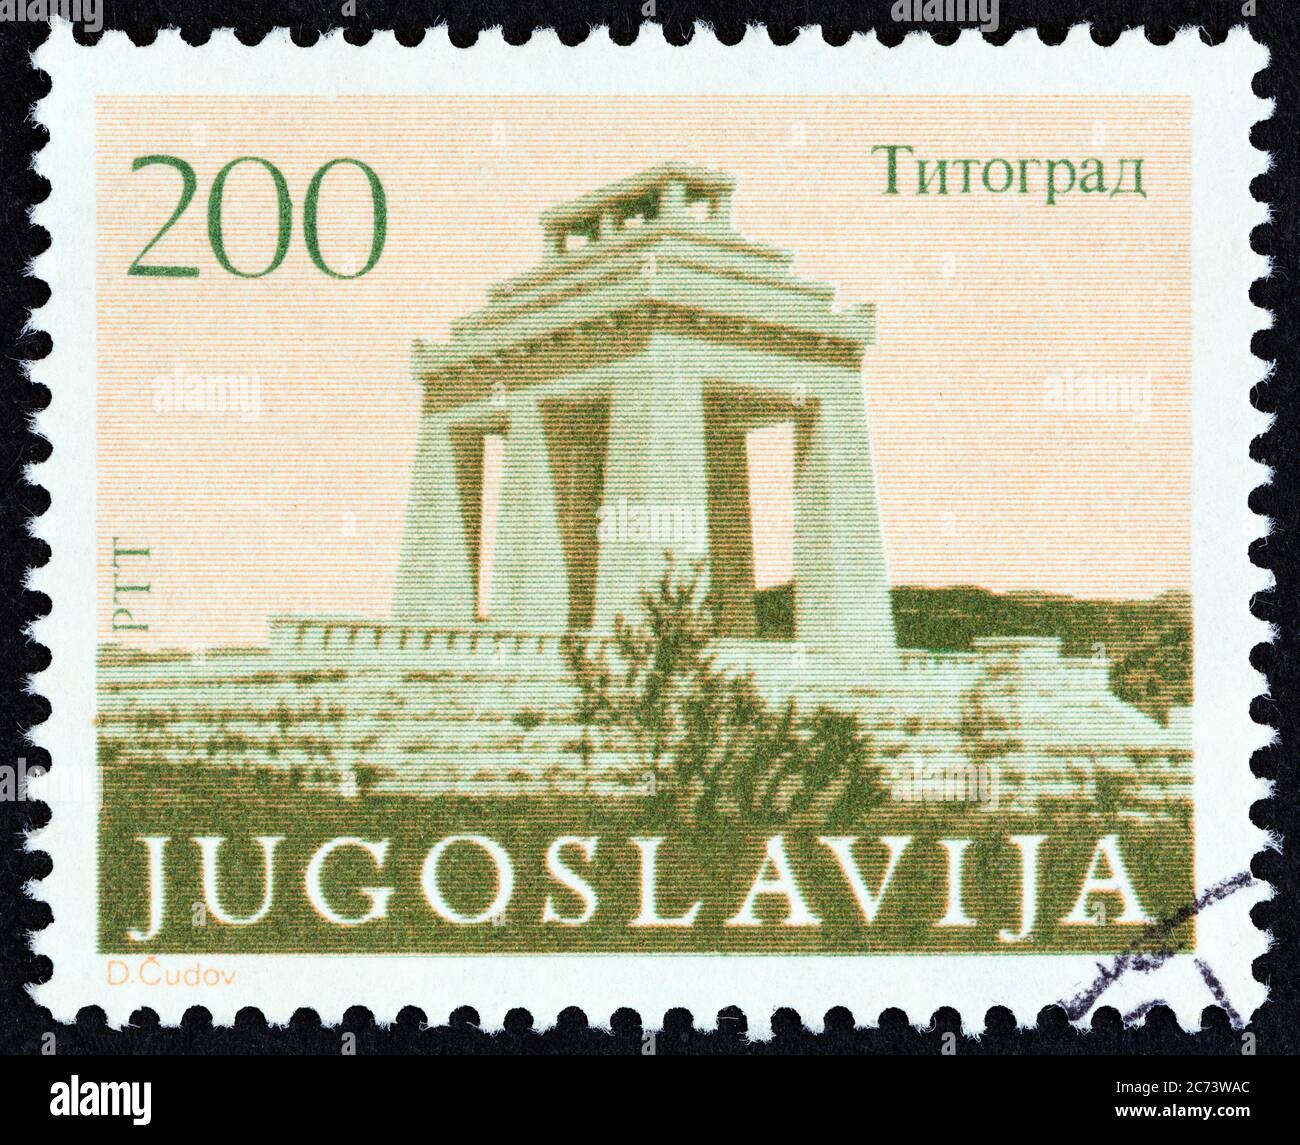 YUGOSLAVIA - CIRCA 1983: A stamp printed in Yugoslavia shows Triumphal Arch, Titograd, circa 1983. Stock Photo